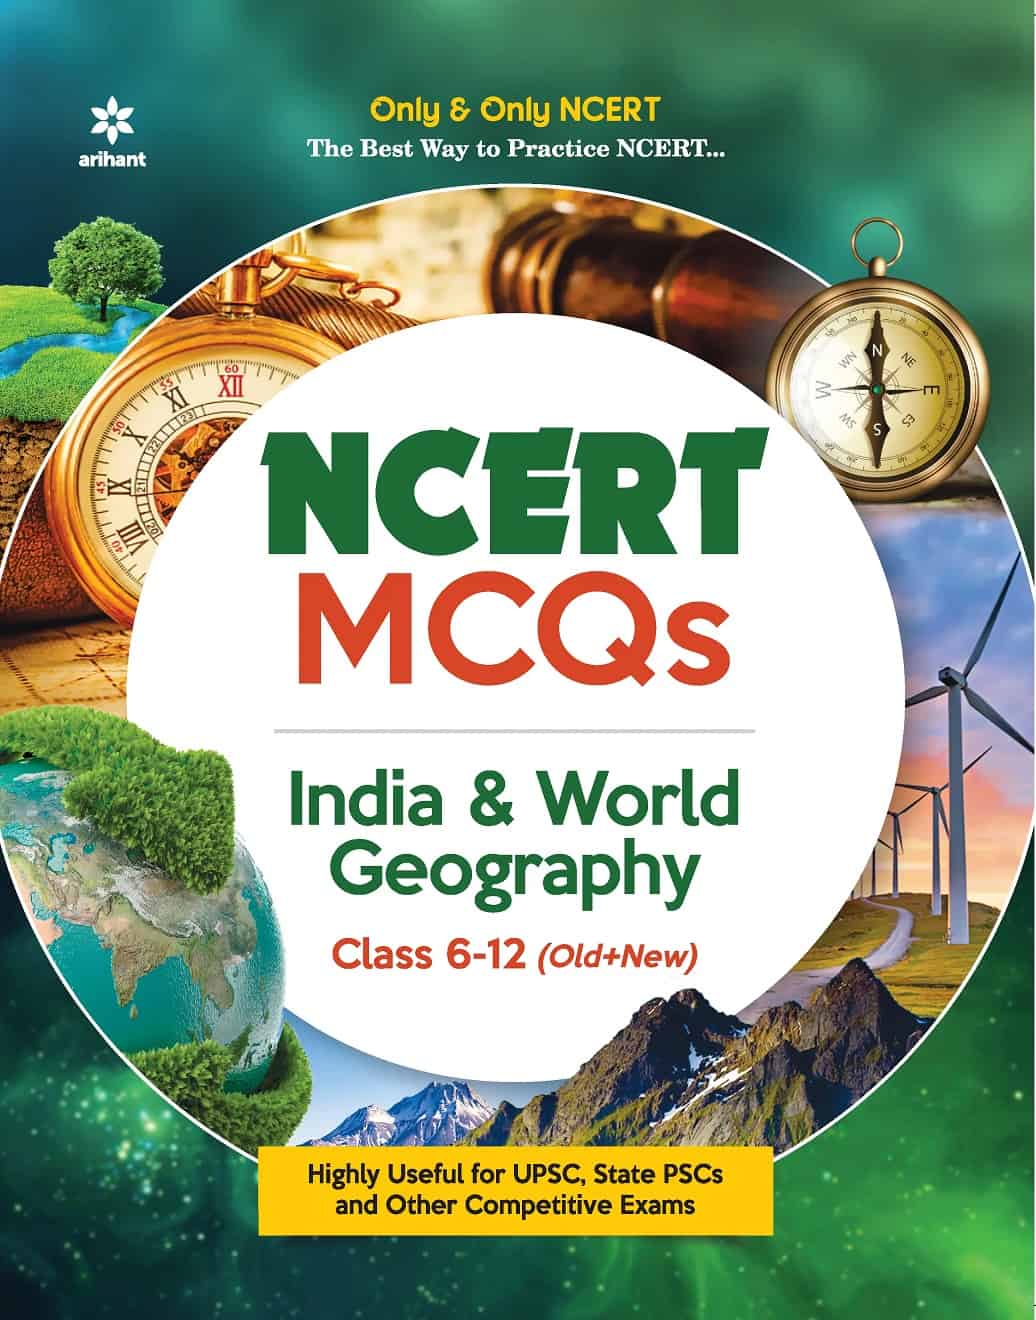 Arihant NCERT MCQs Indian Geography - Class 9-12 PDF